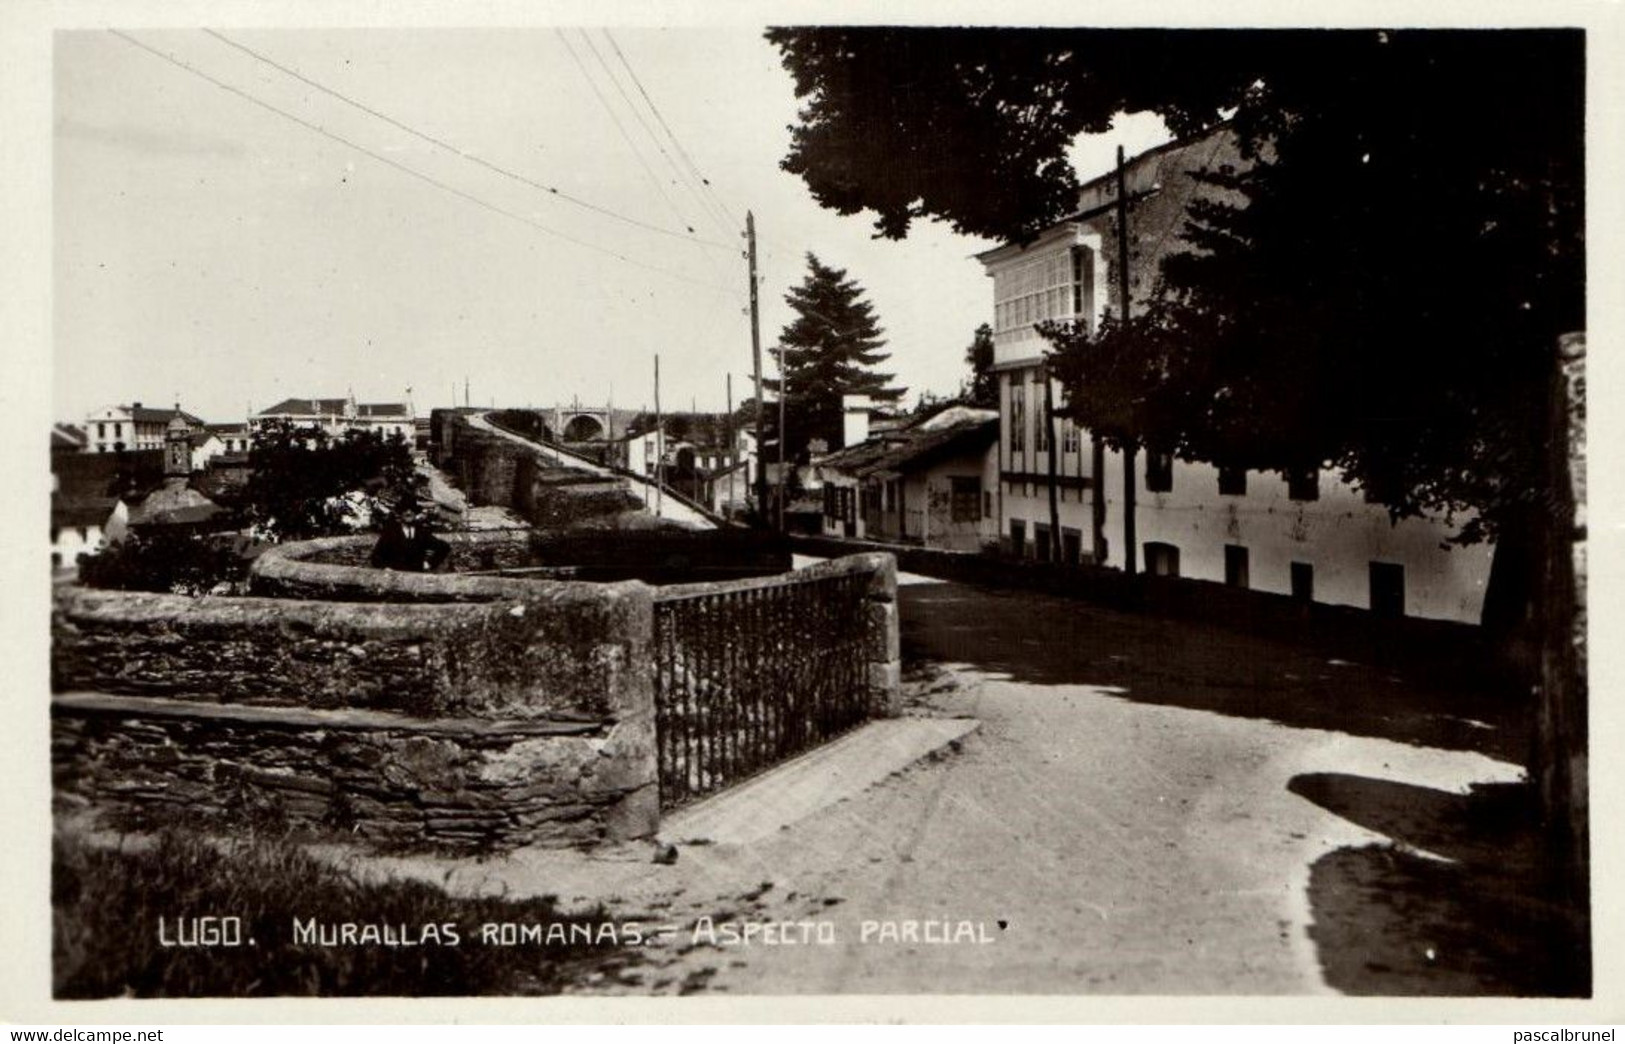 LUGO - MURALLAS ROMANAS - ASPECTO PARCIAL - MURAILLE ROMAINE - ASPECT PARTIEL - Lugo